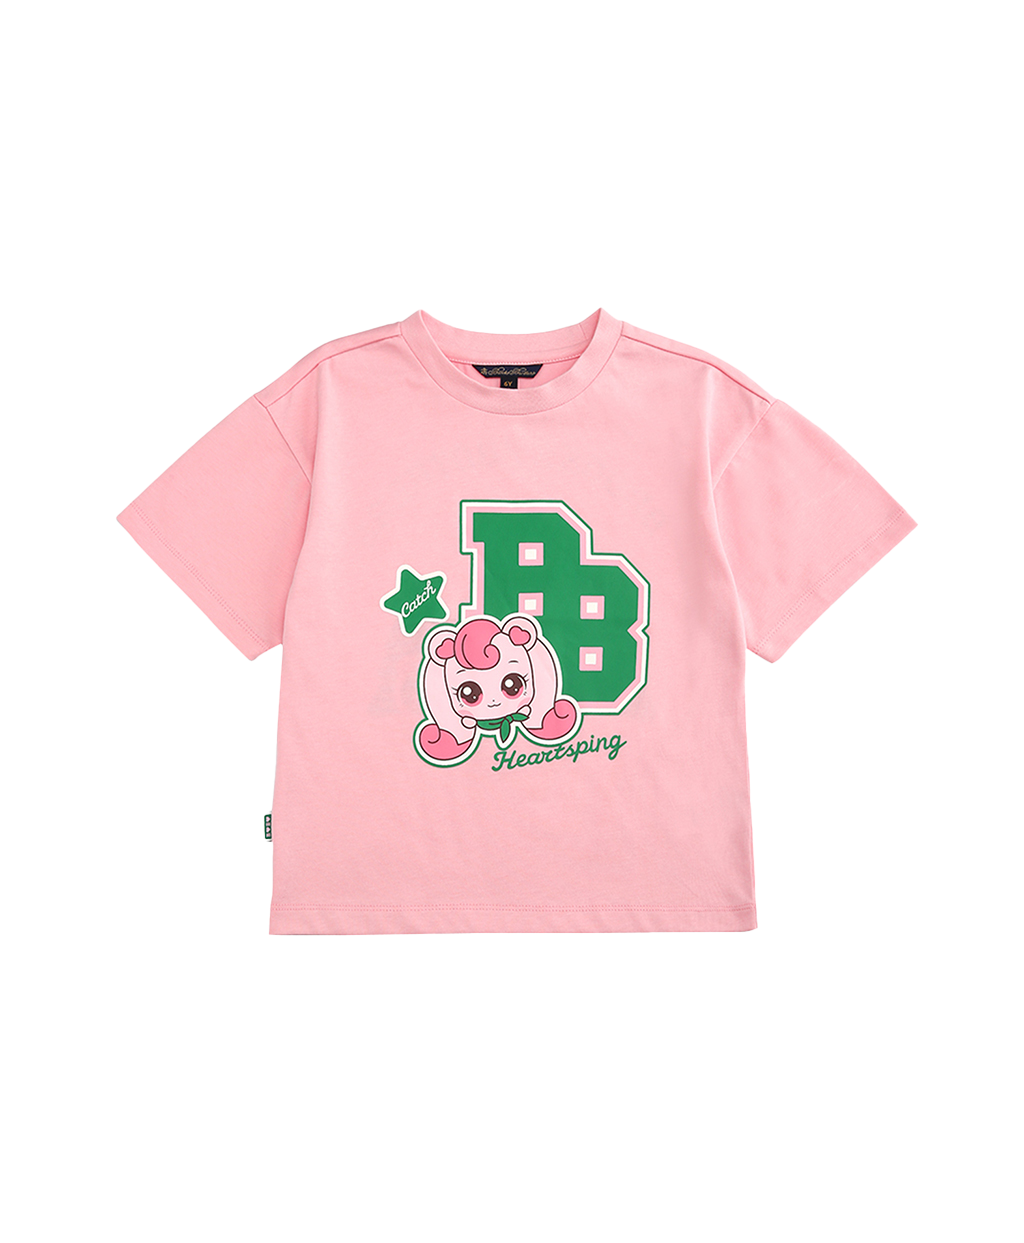 [Catch! Teenieping] BB 티니핑 빅 로고 티셔츠 (핑크)